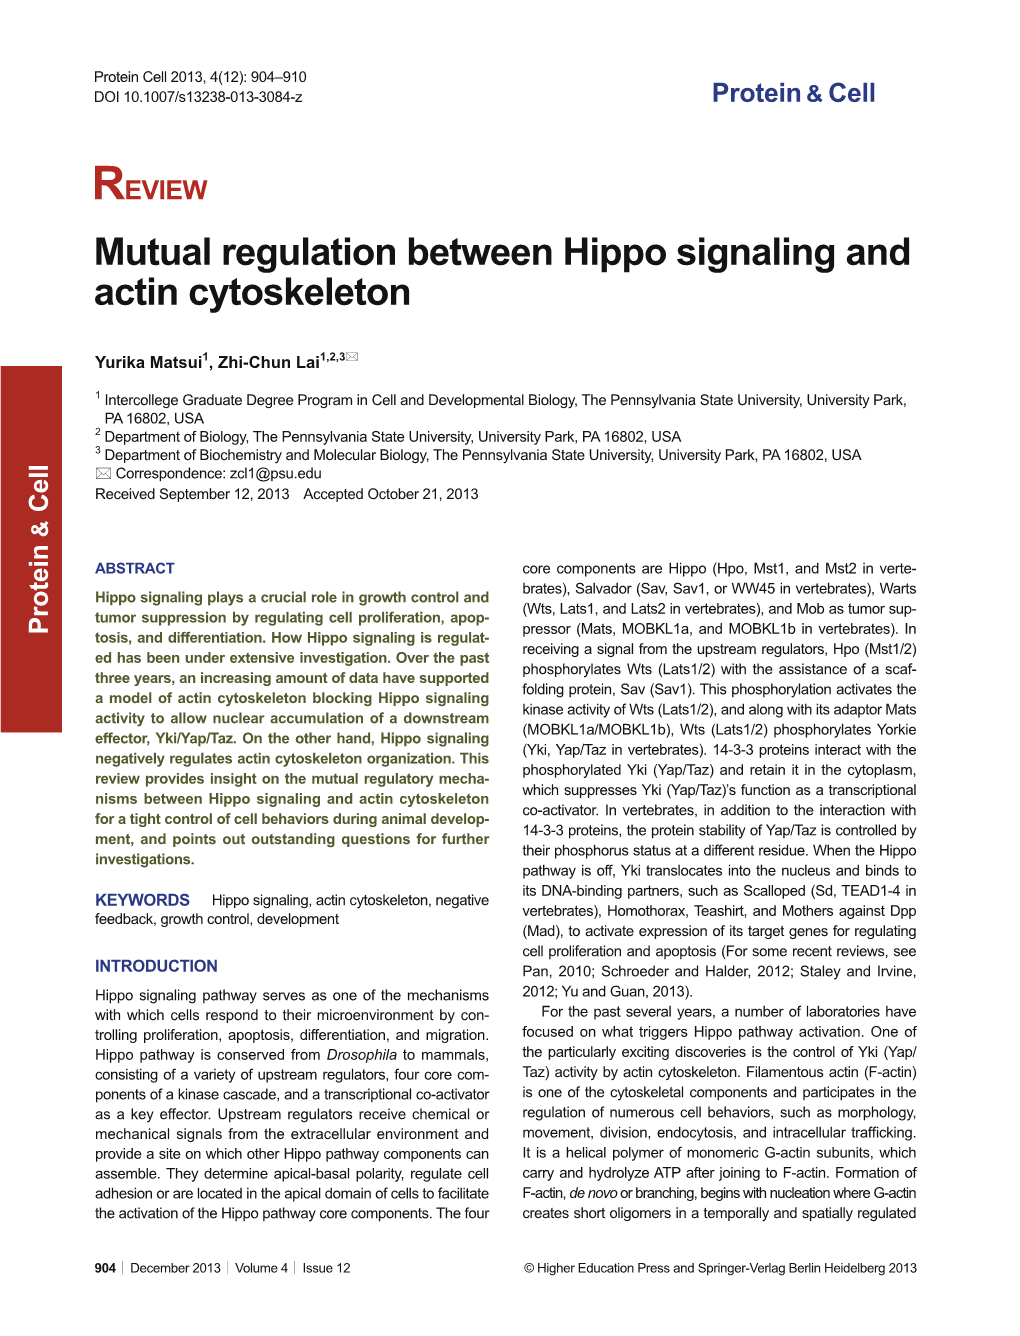 Mutual Regulation Between Hippo Signaling and Actin Cytoskeleton